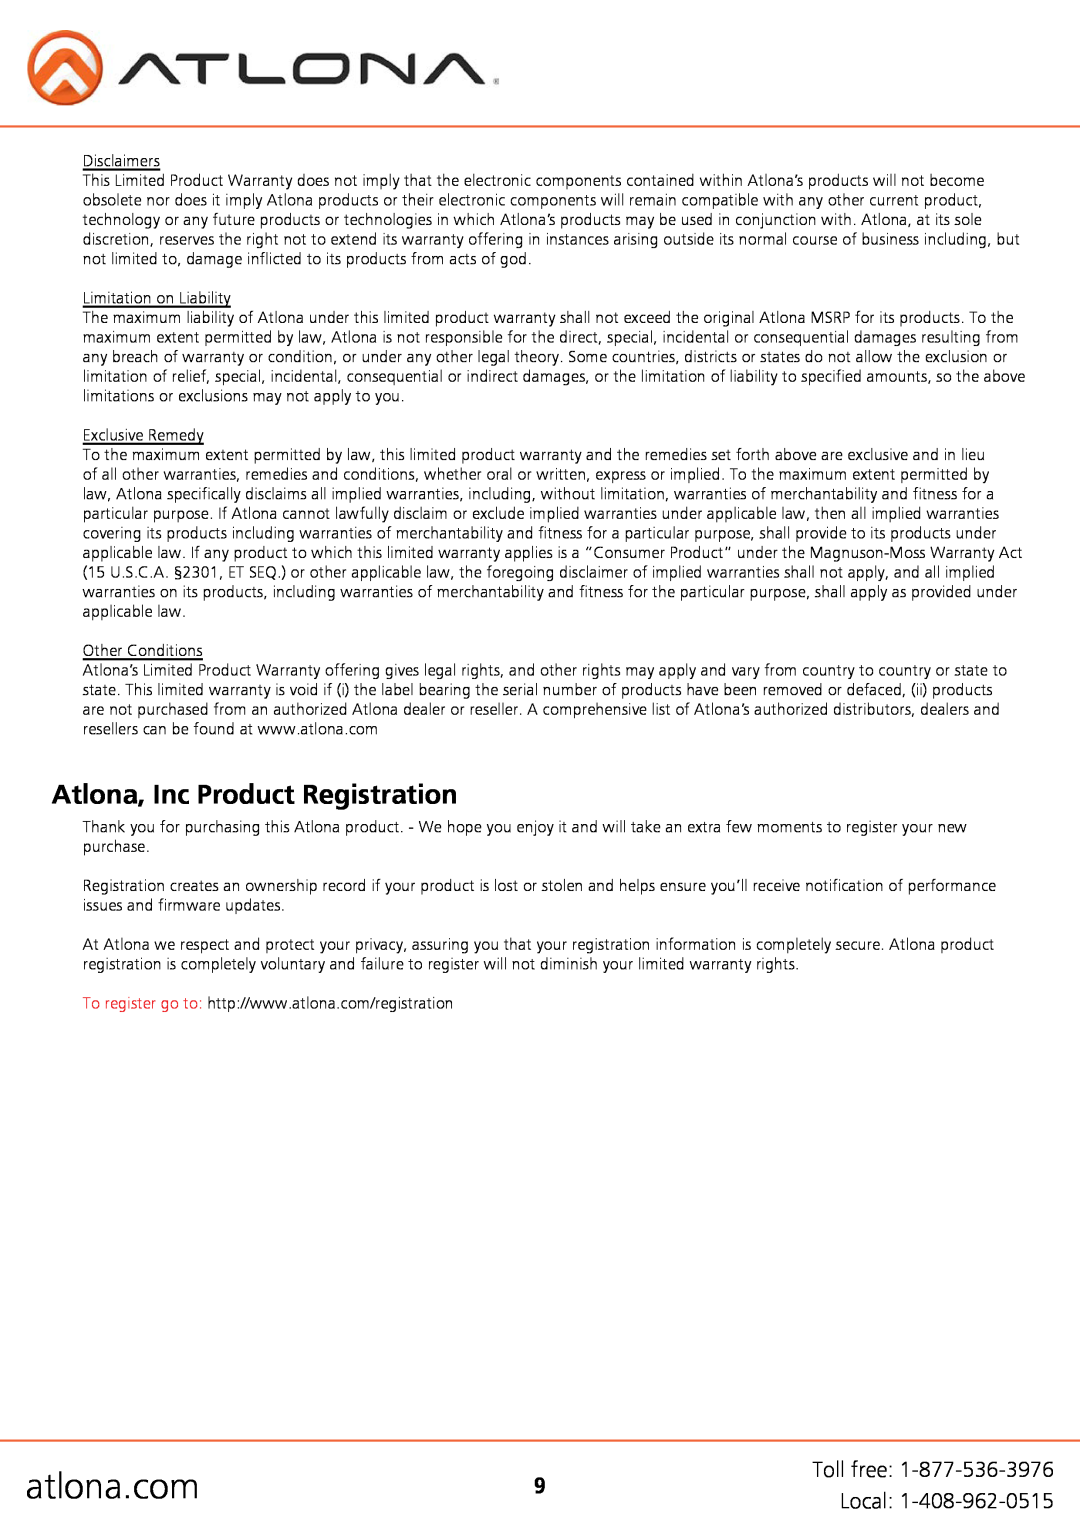 Atlona AT-HDTX-RSNET user manual Atlona, Inc Product Registration, atlona.com 